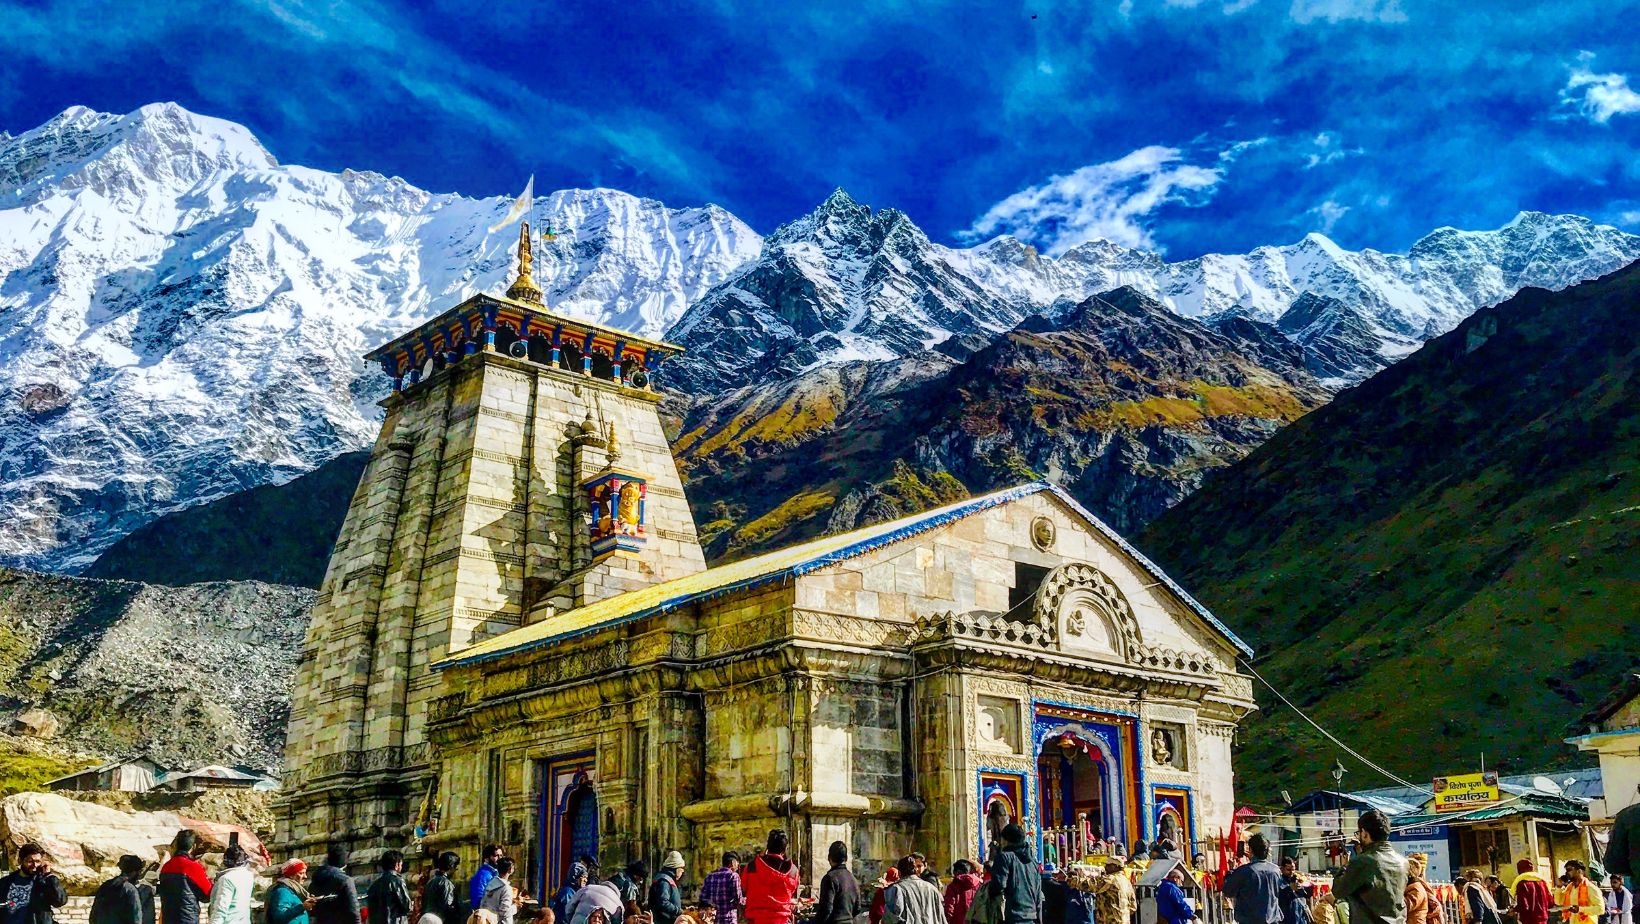 Places to visit in kedarnath